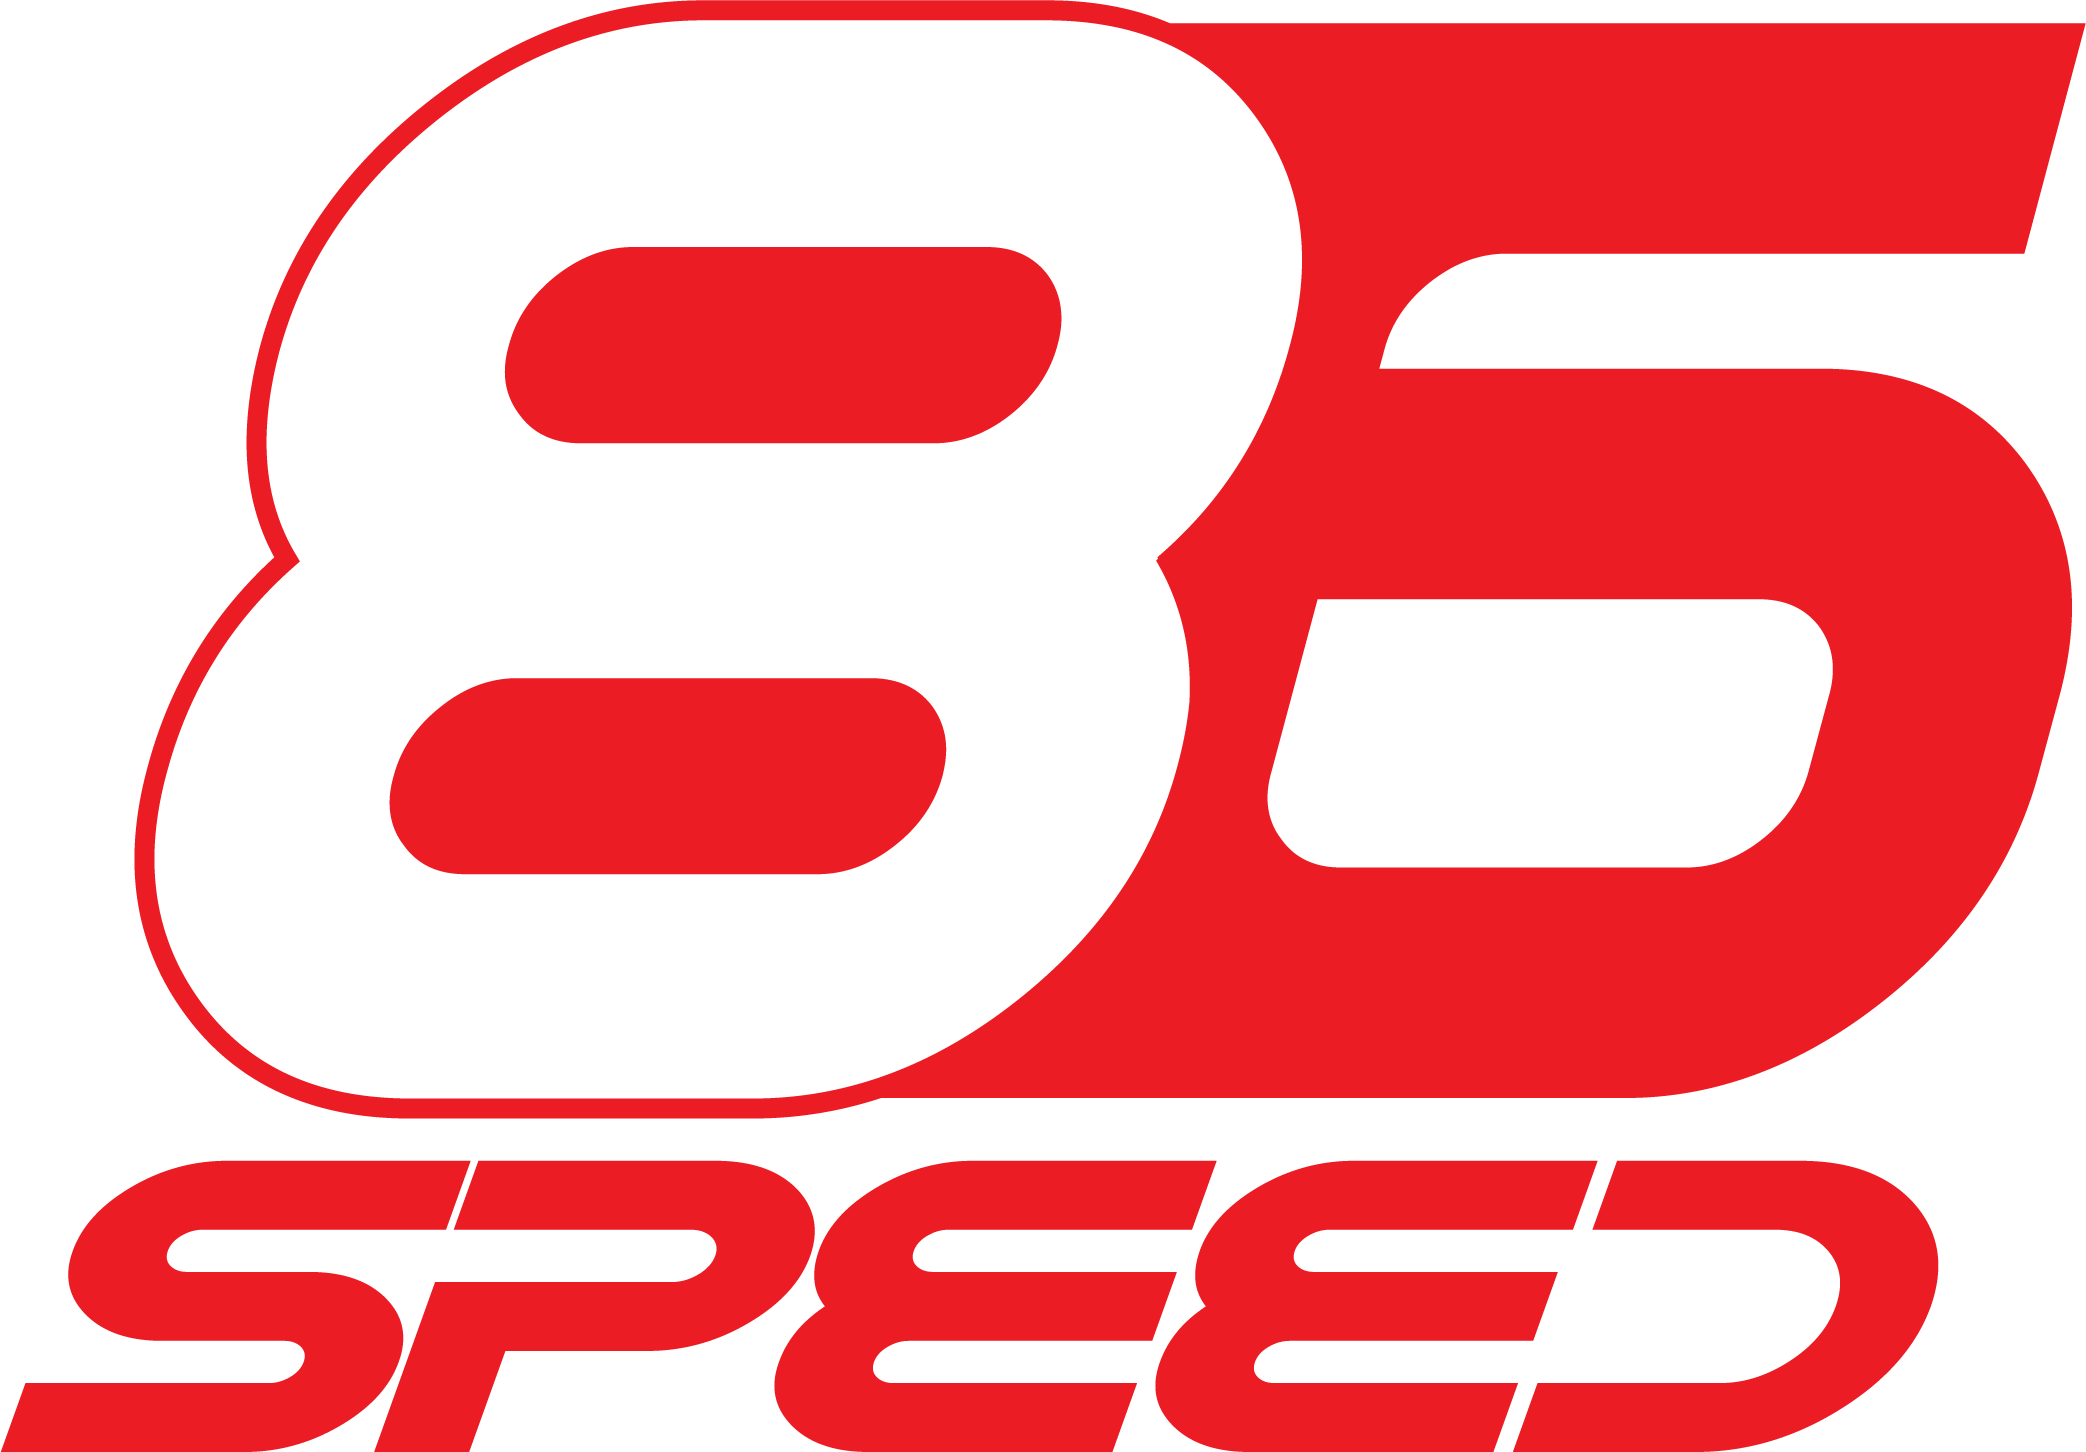 86 Speed Logo, Verus Engineering Distributor and Dealer